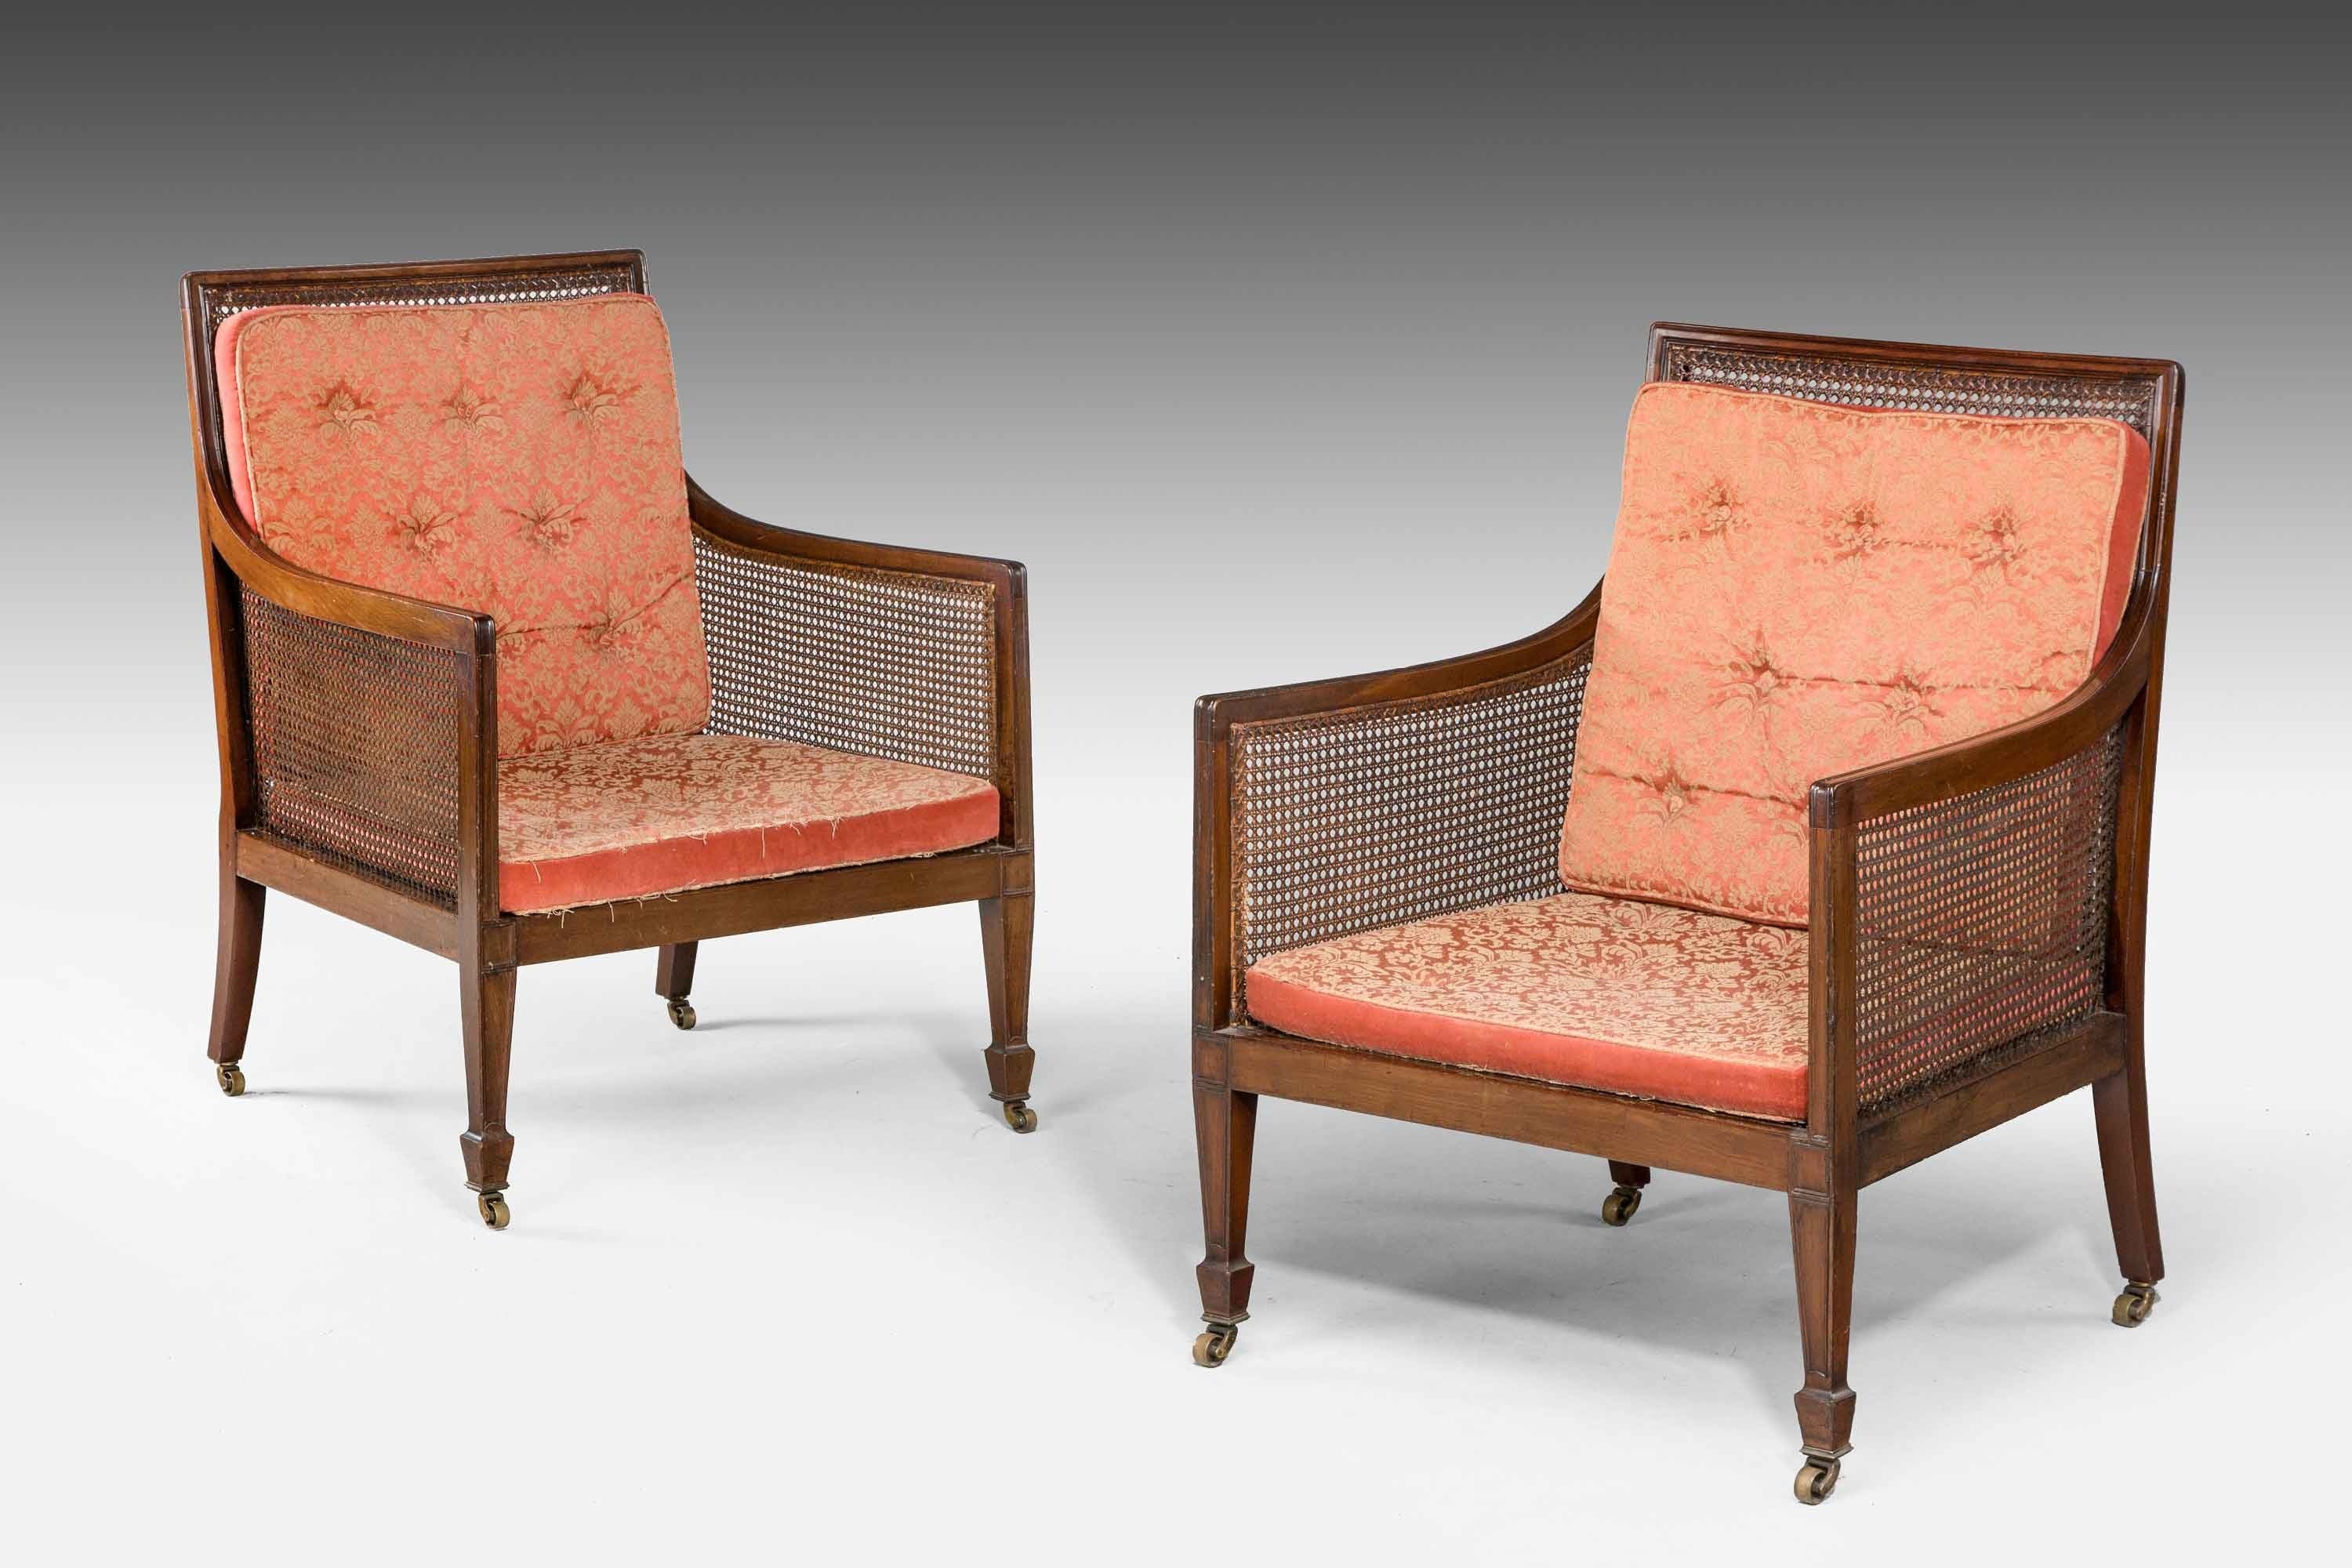 Pair of Regency Style Bergere Chairs